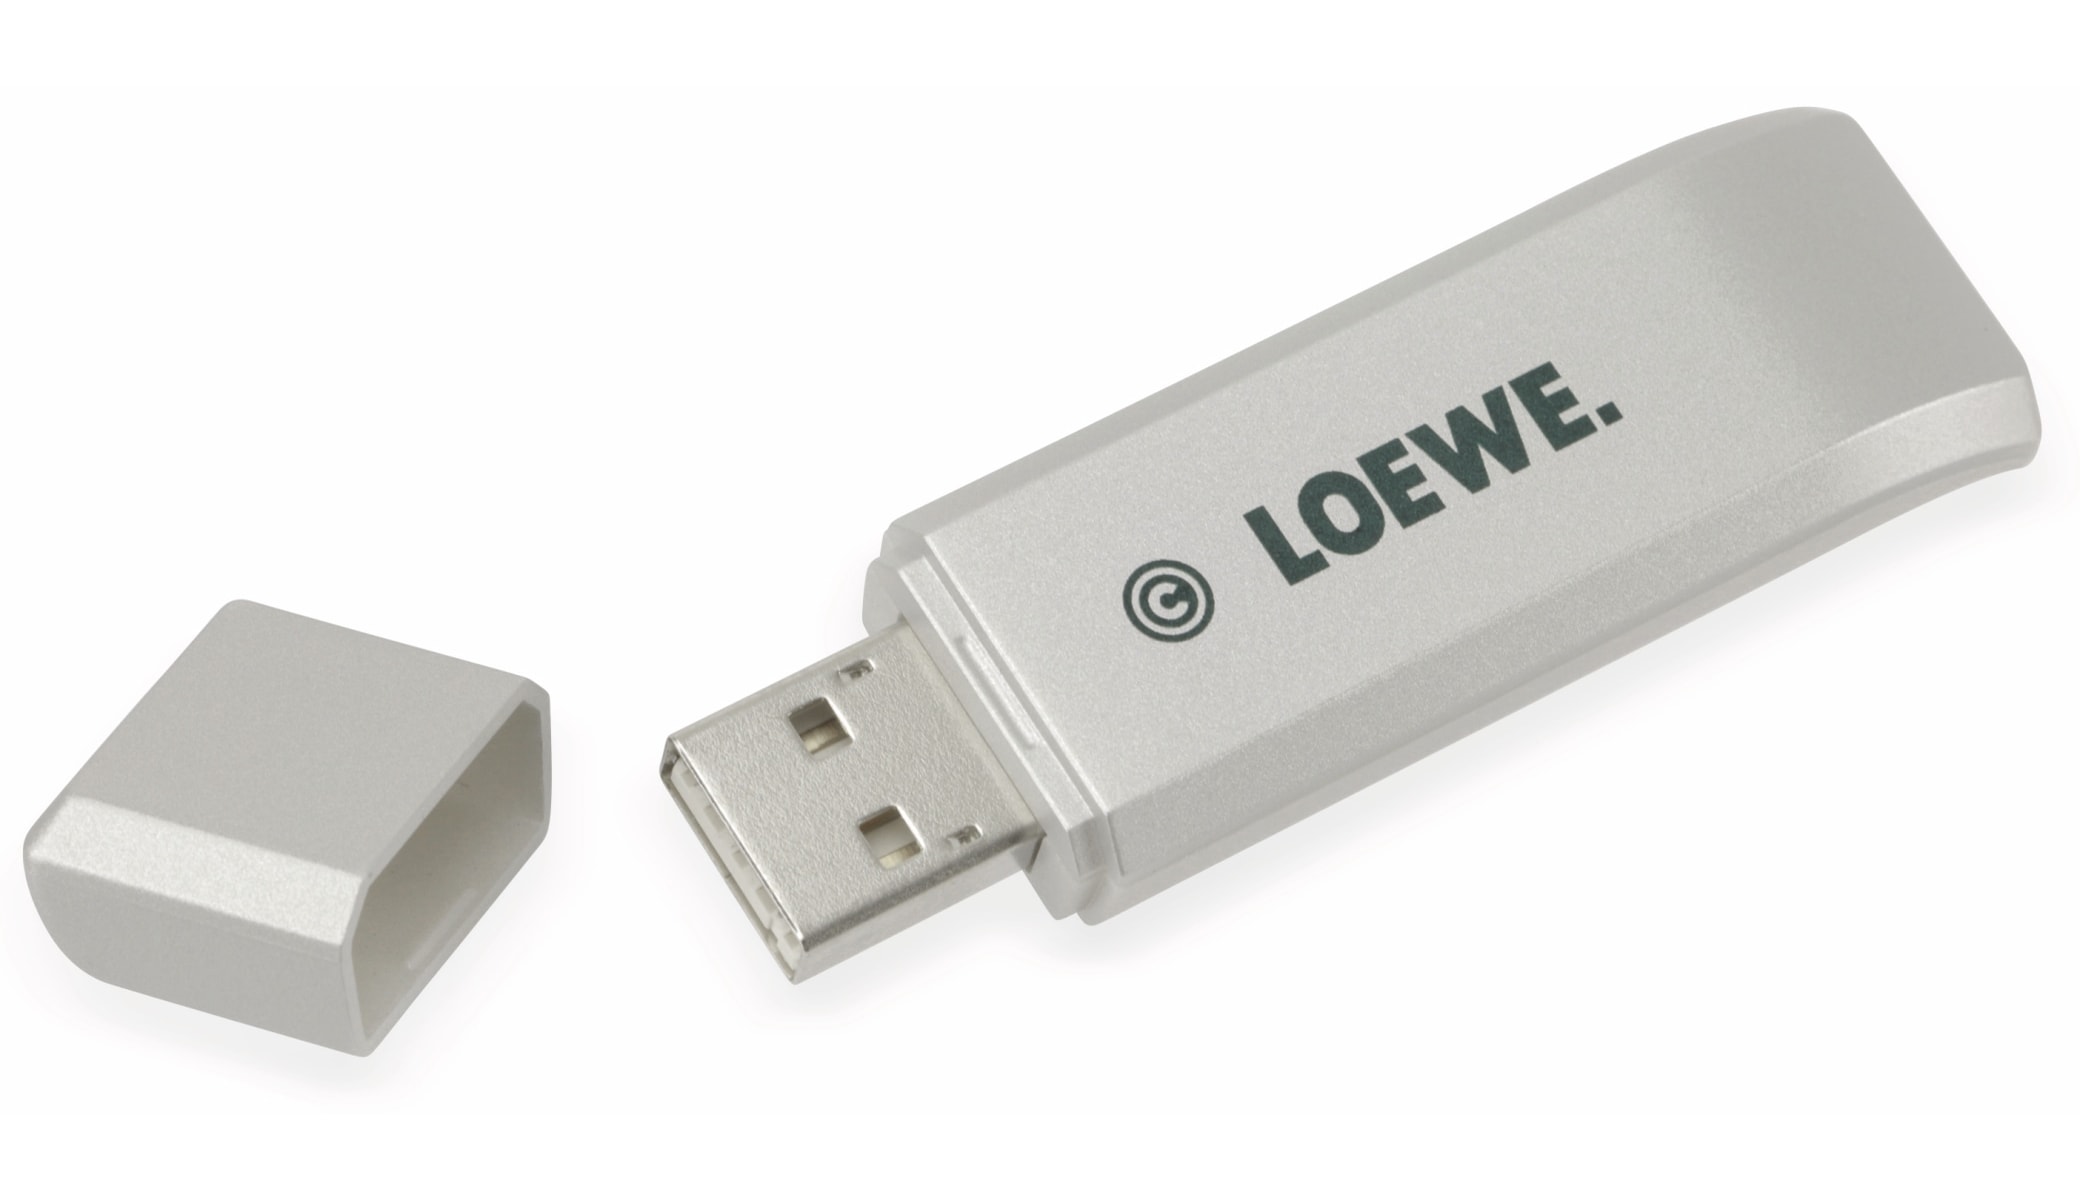 LOEWE WLAN USB-Stick VEZZY100, 300 Mbps